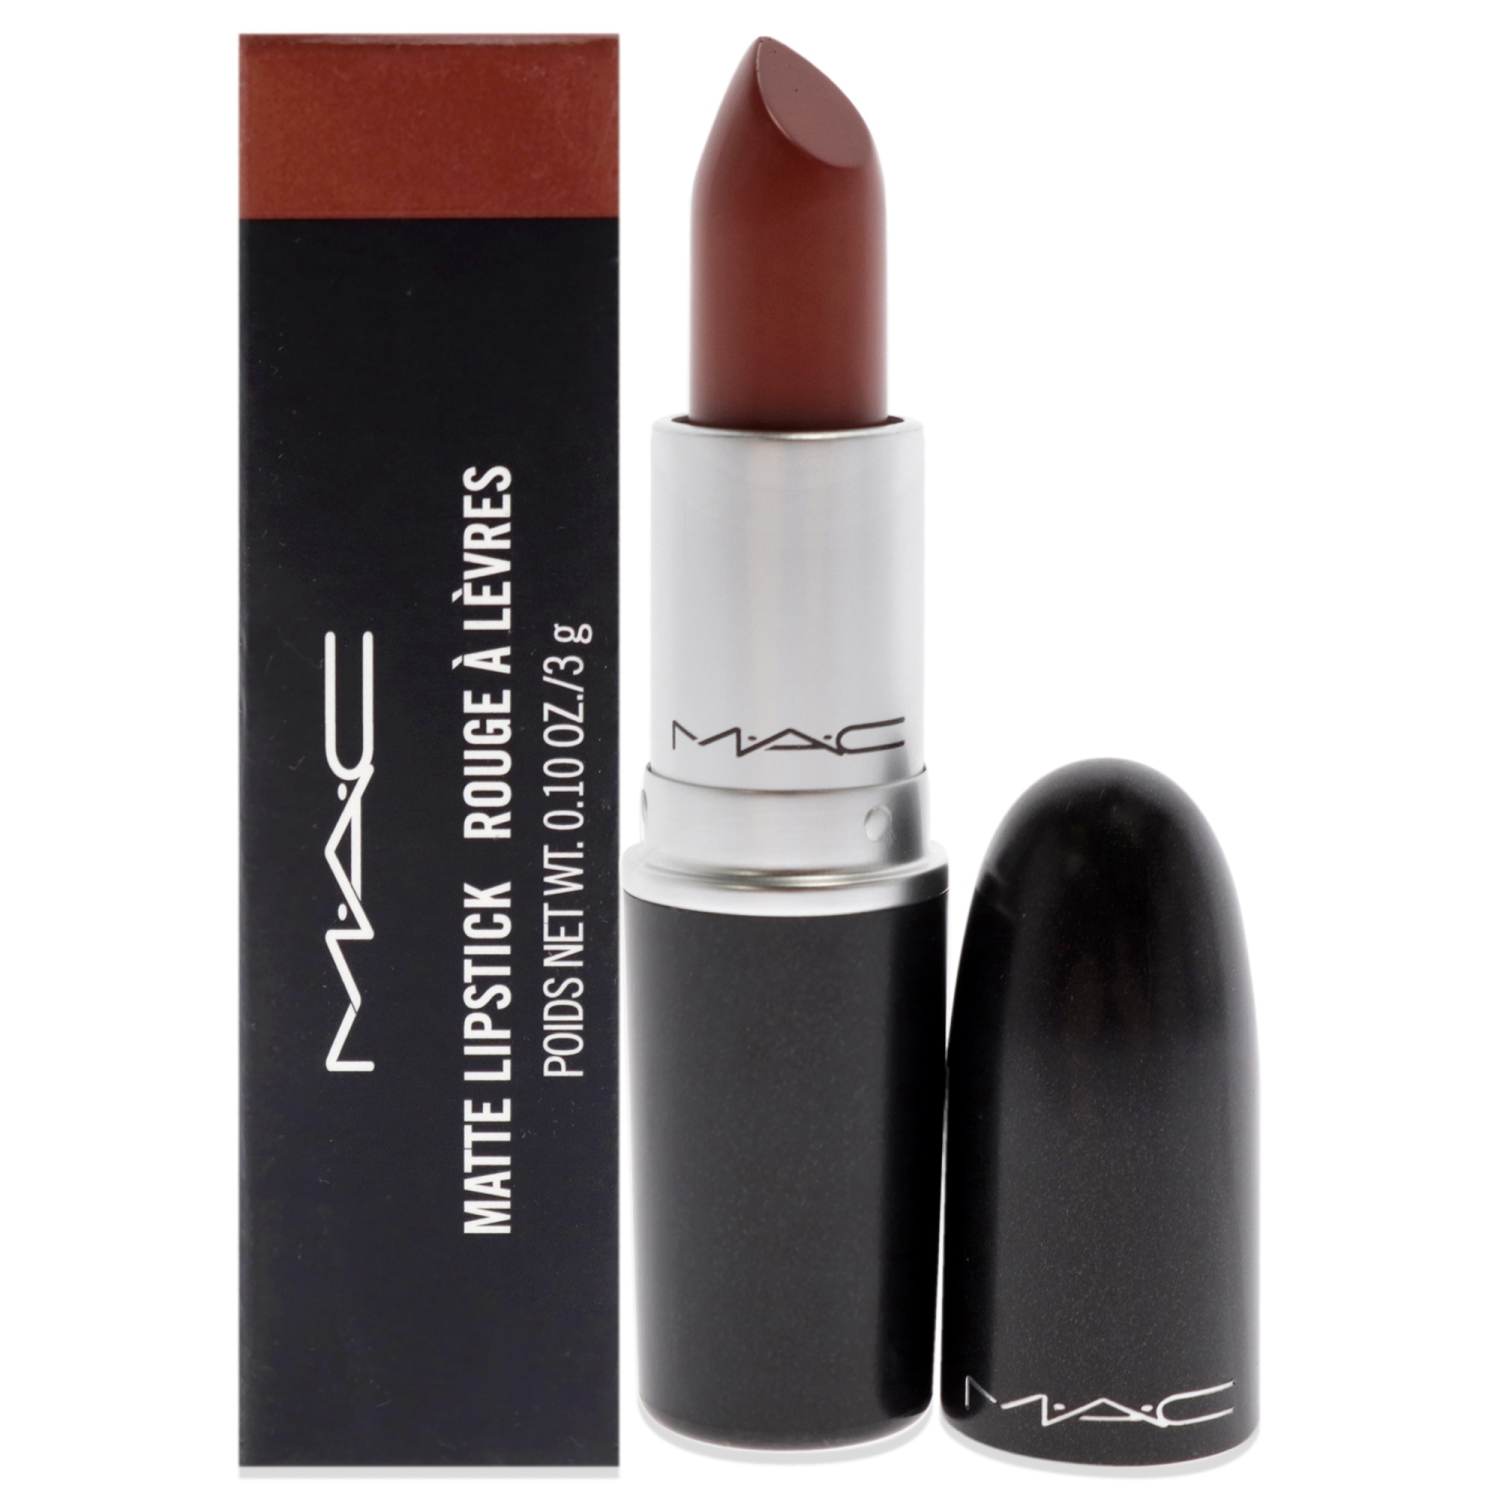 Matte Lipstick - Taupe by MAC for Women - 0.1 oz Lipstick